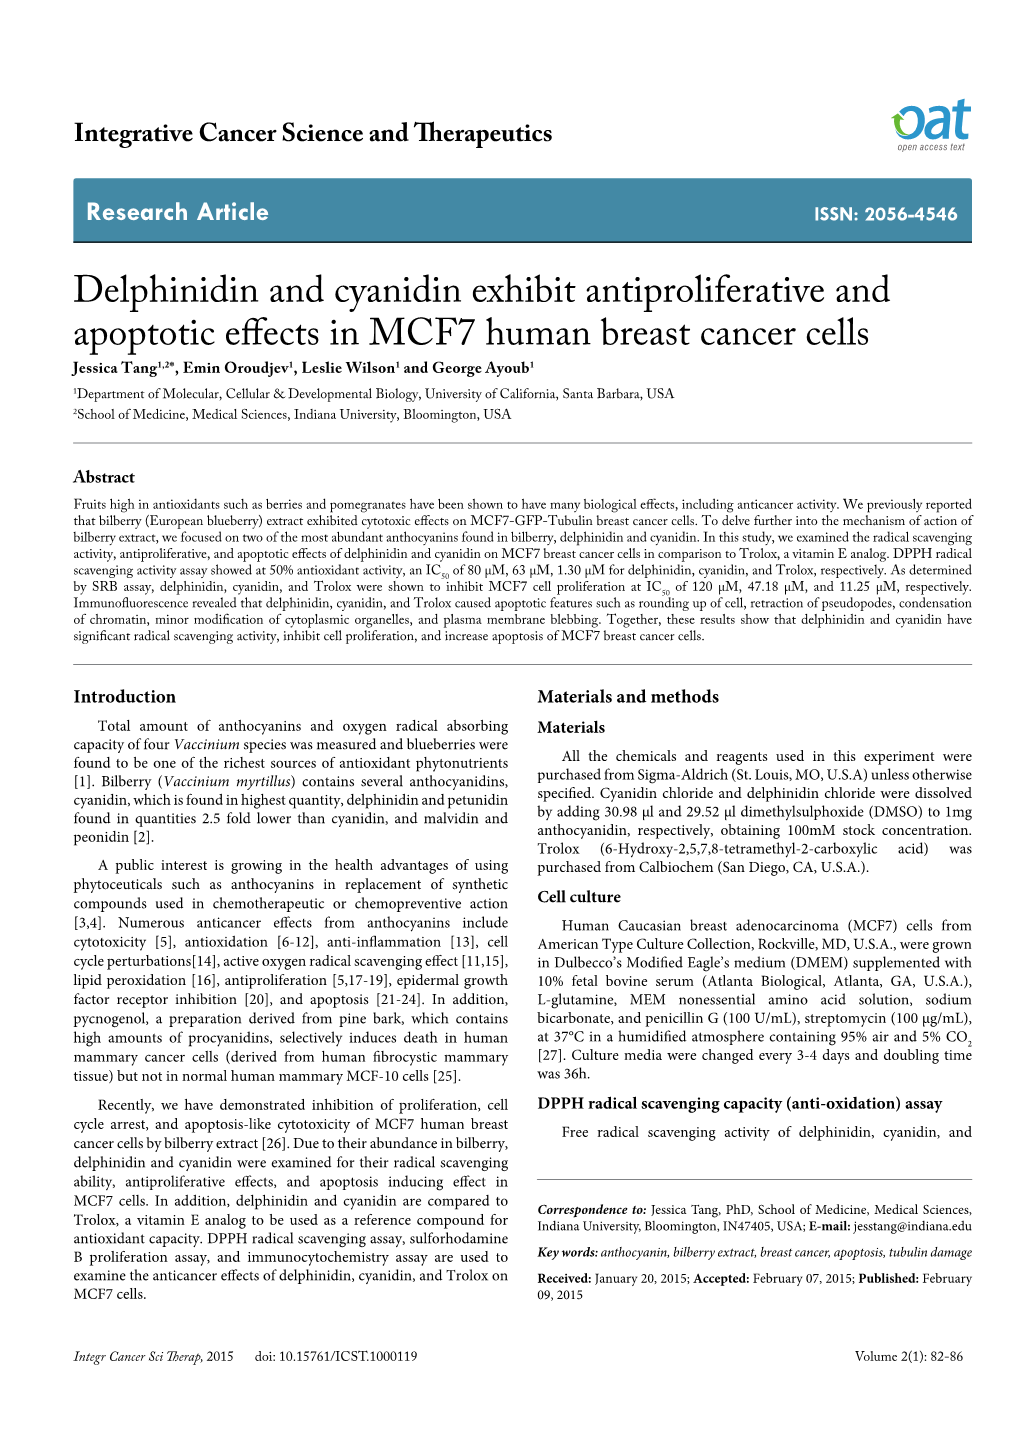 Delphinidin and Cyanidin Exhibit Antiproliferative and Apoptotic